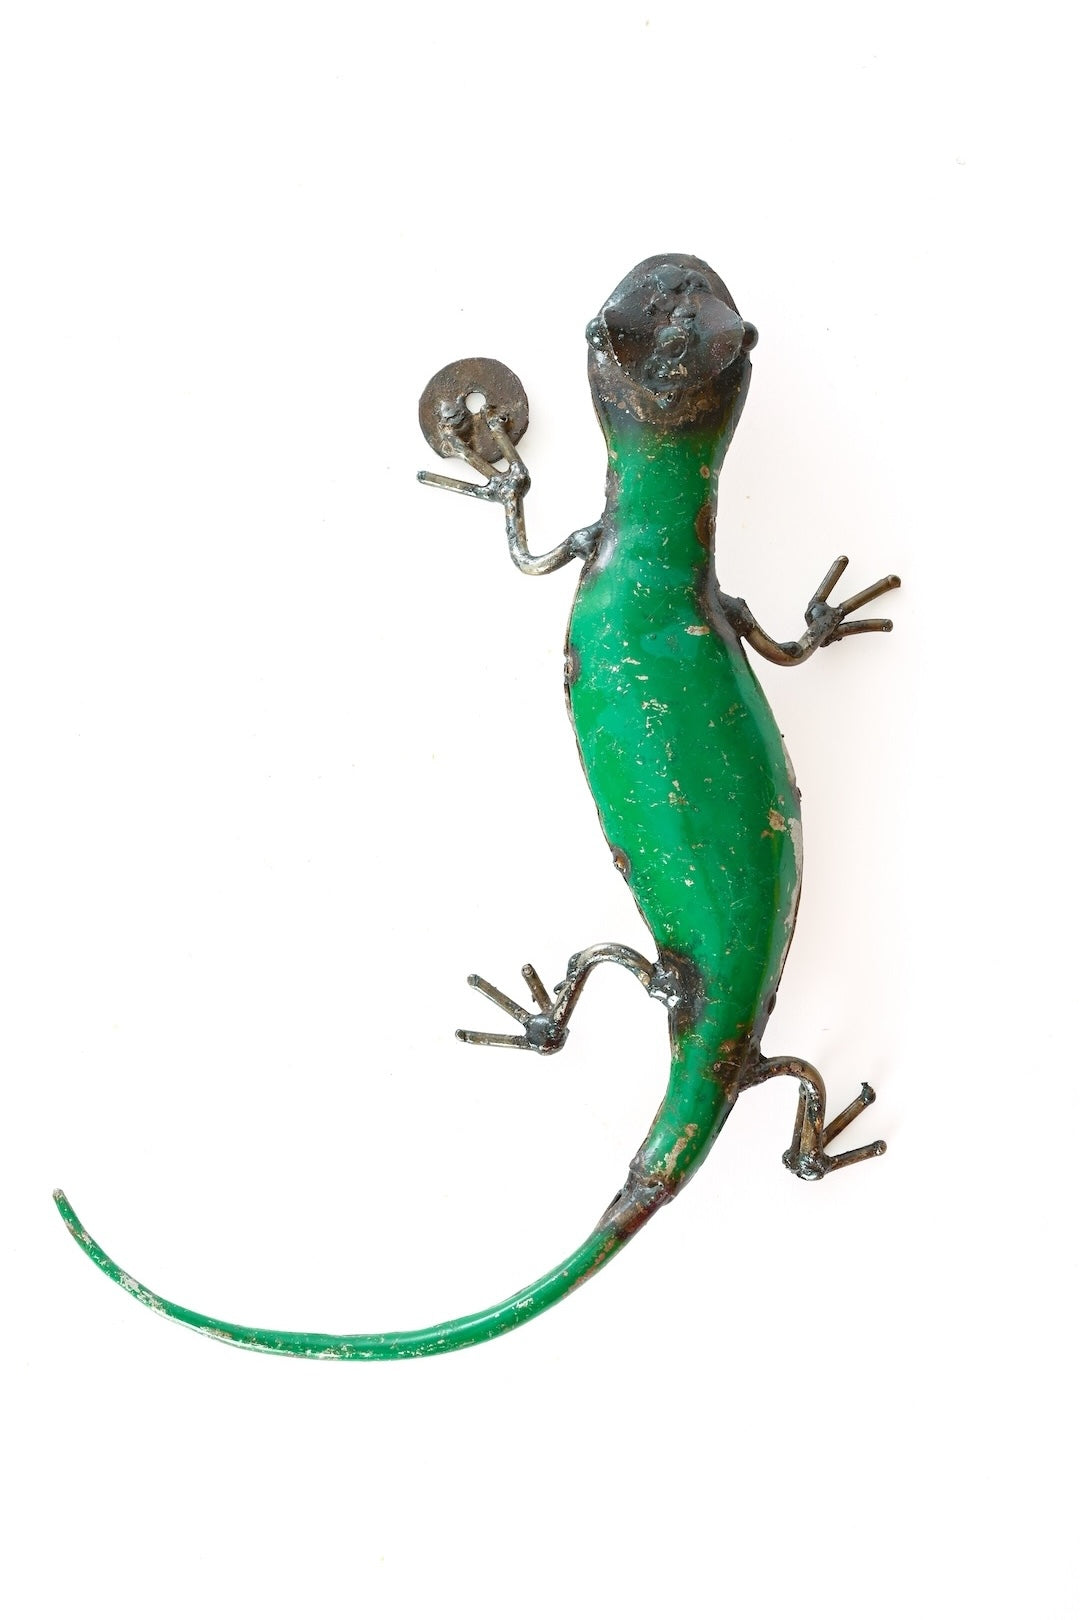 Recycled Oil Drum Salamander Sculpture - Green